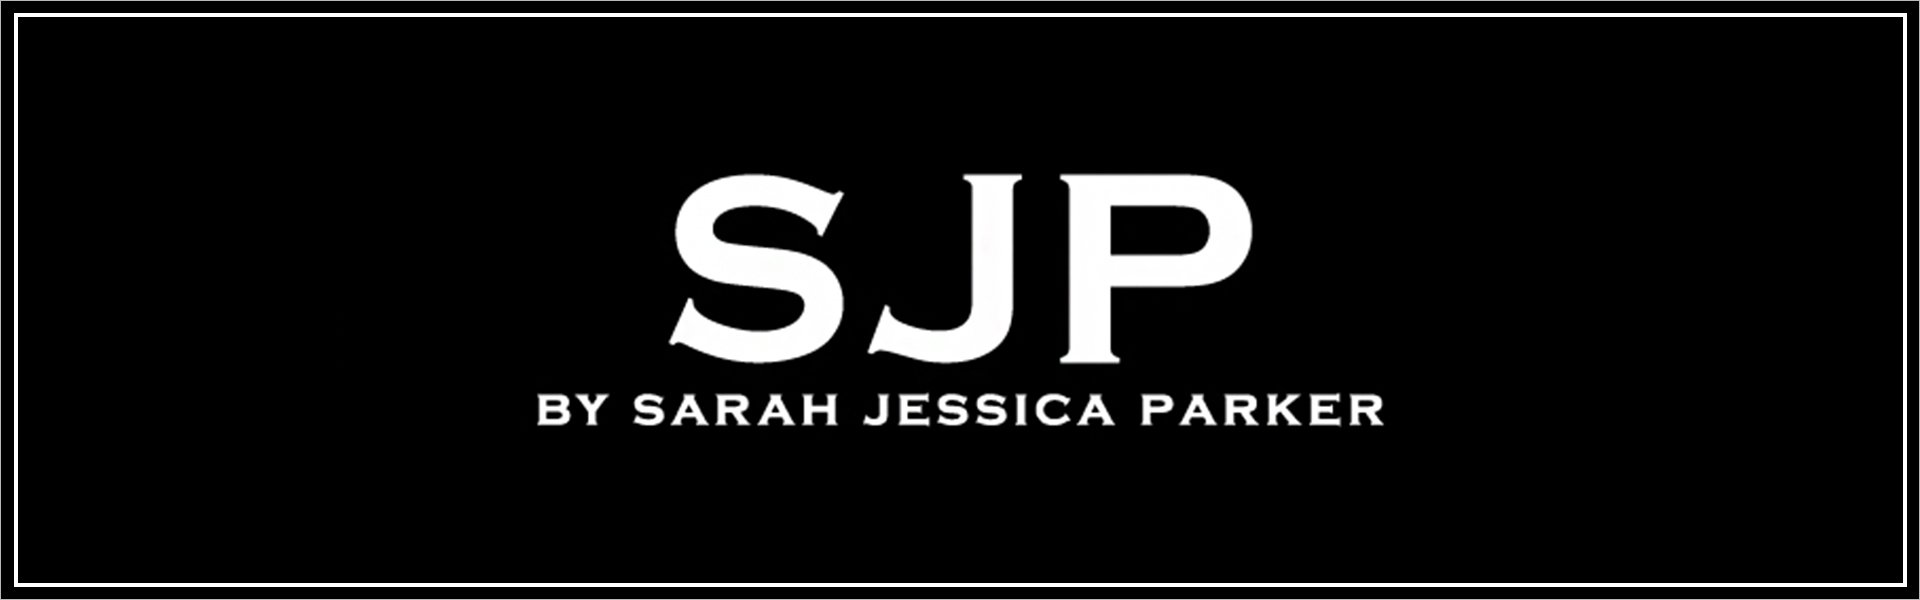 SJP BORN LOVELY парфюмированная вода для женщин 50мл ТЕСТЕР Sarah Jessica Parker